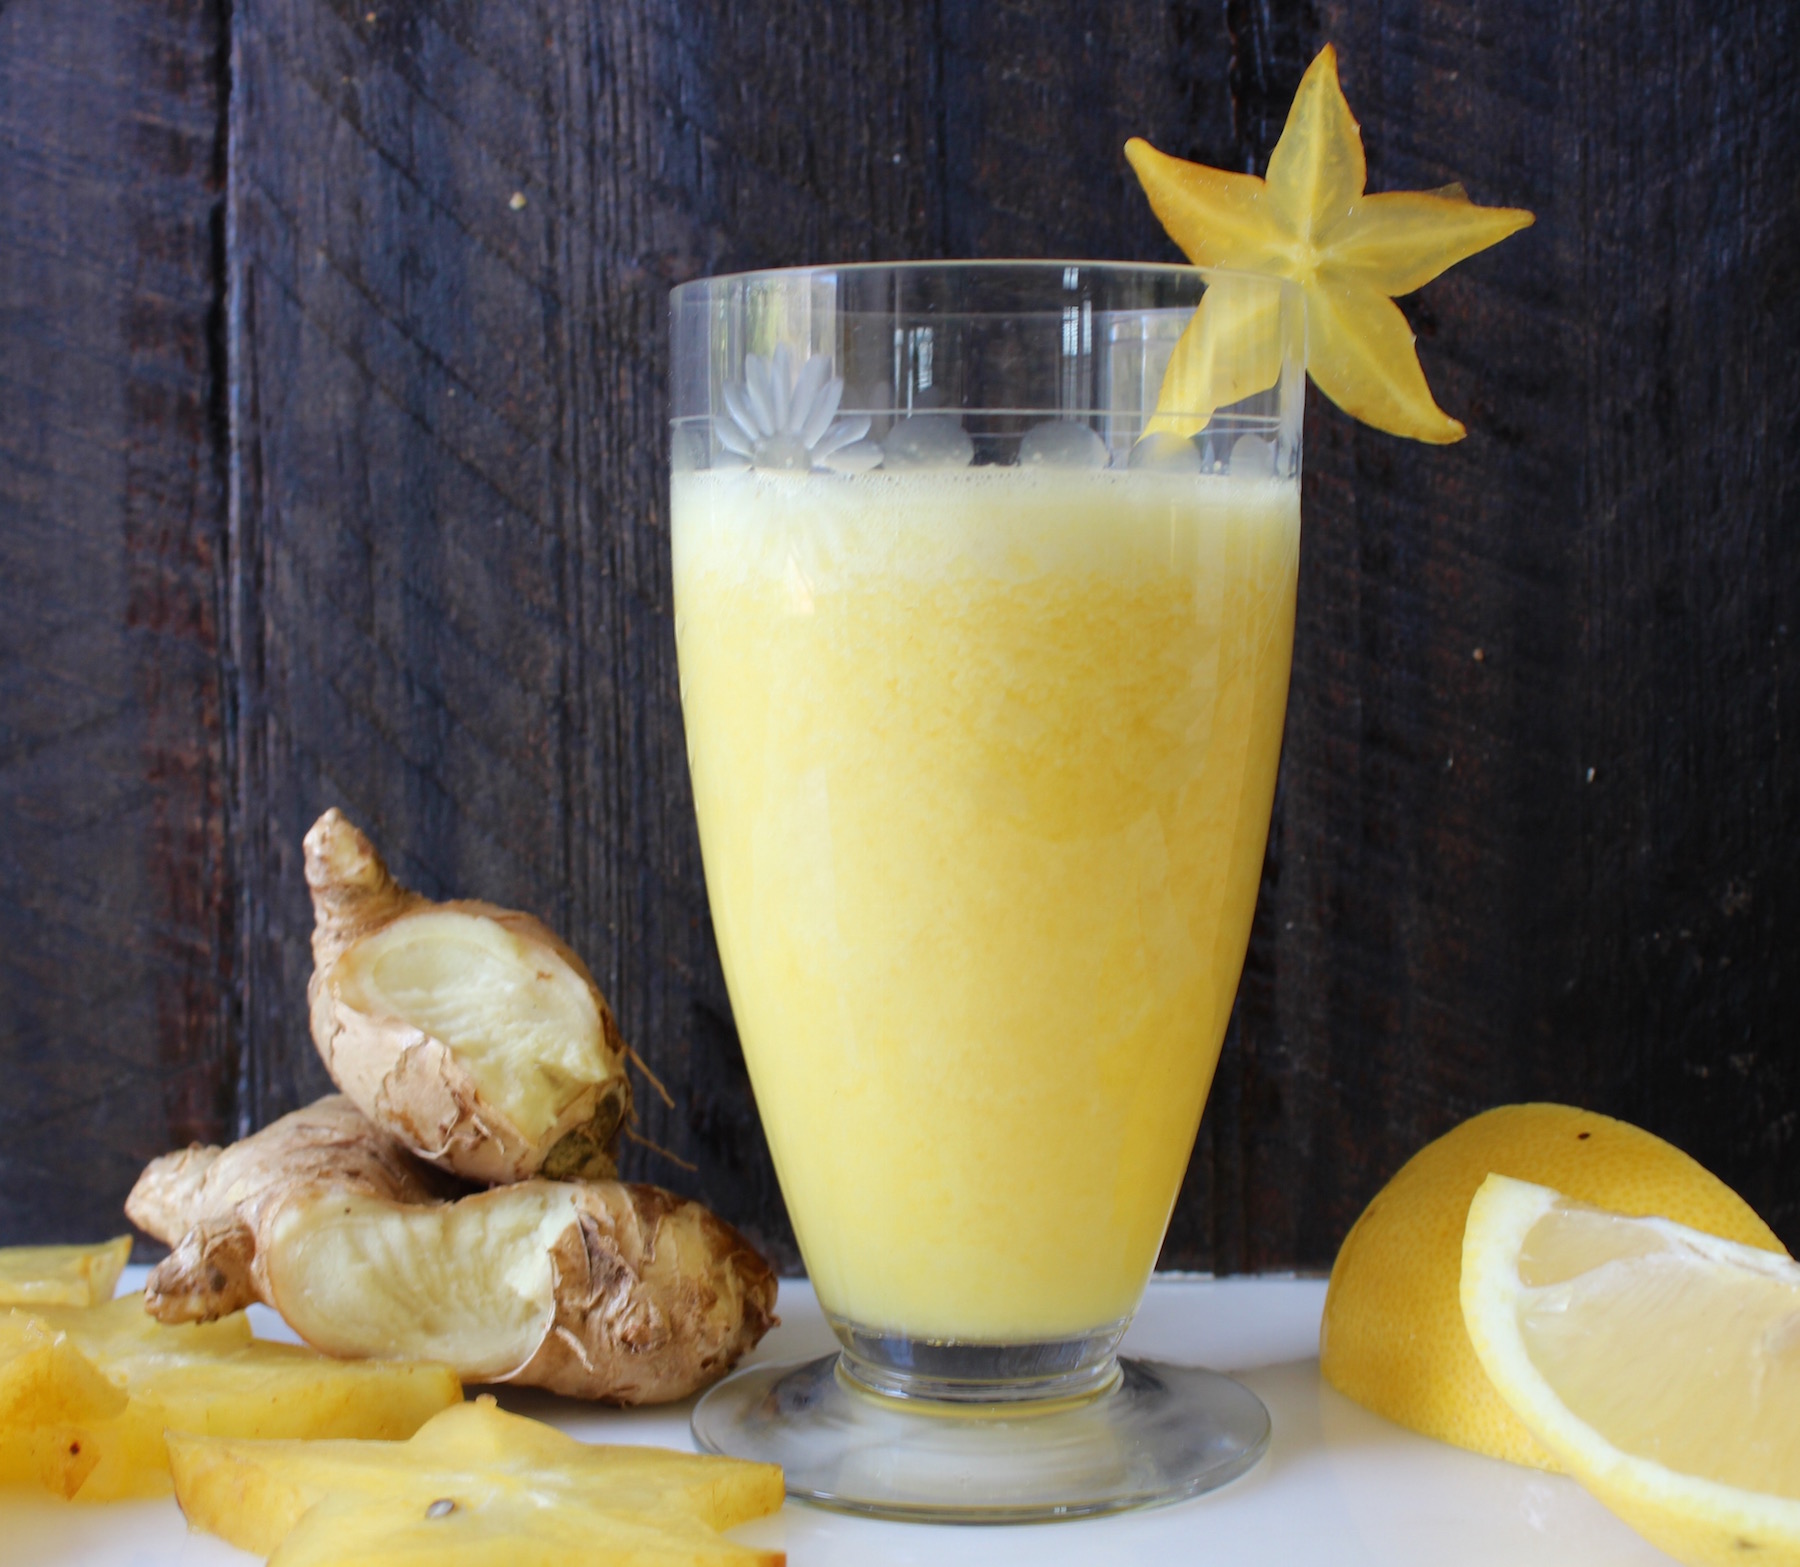 starfruit juice in glass